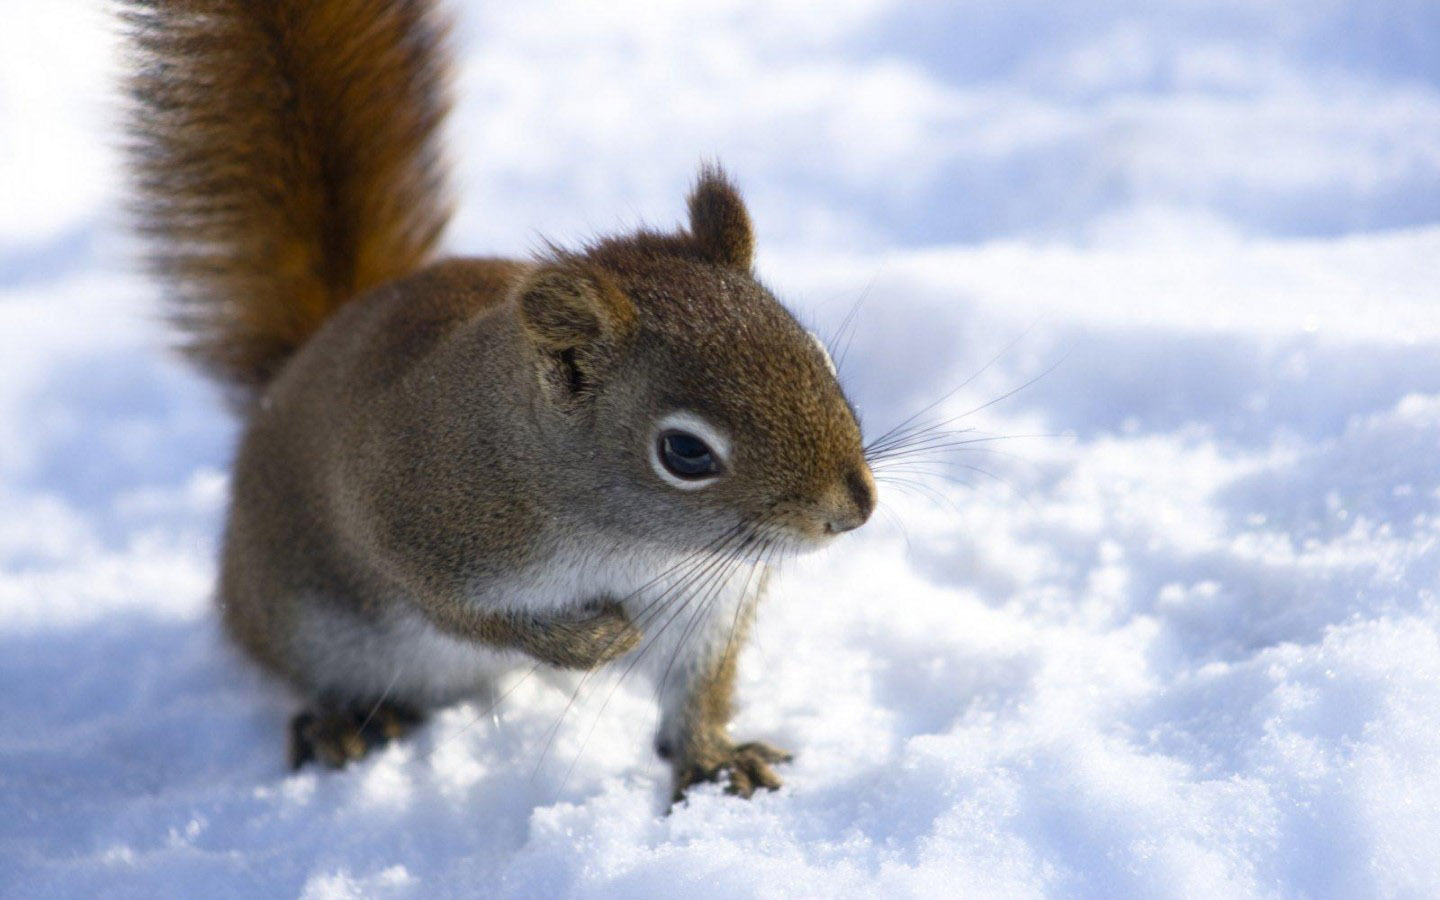 Cute little squirrel desktop wallpaper in the snow